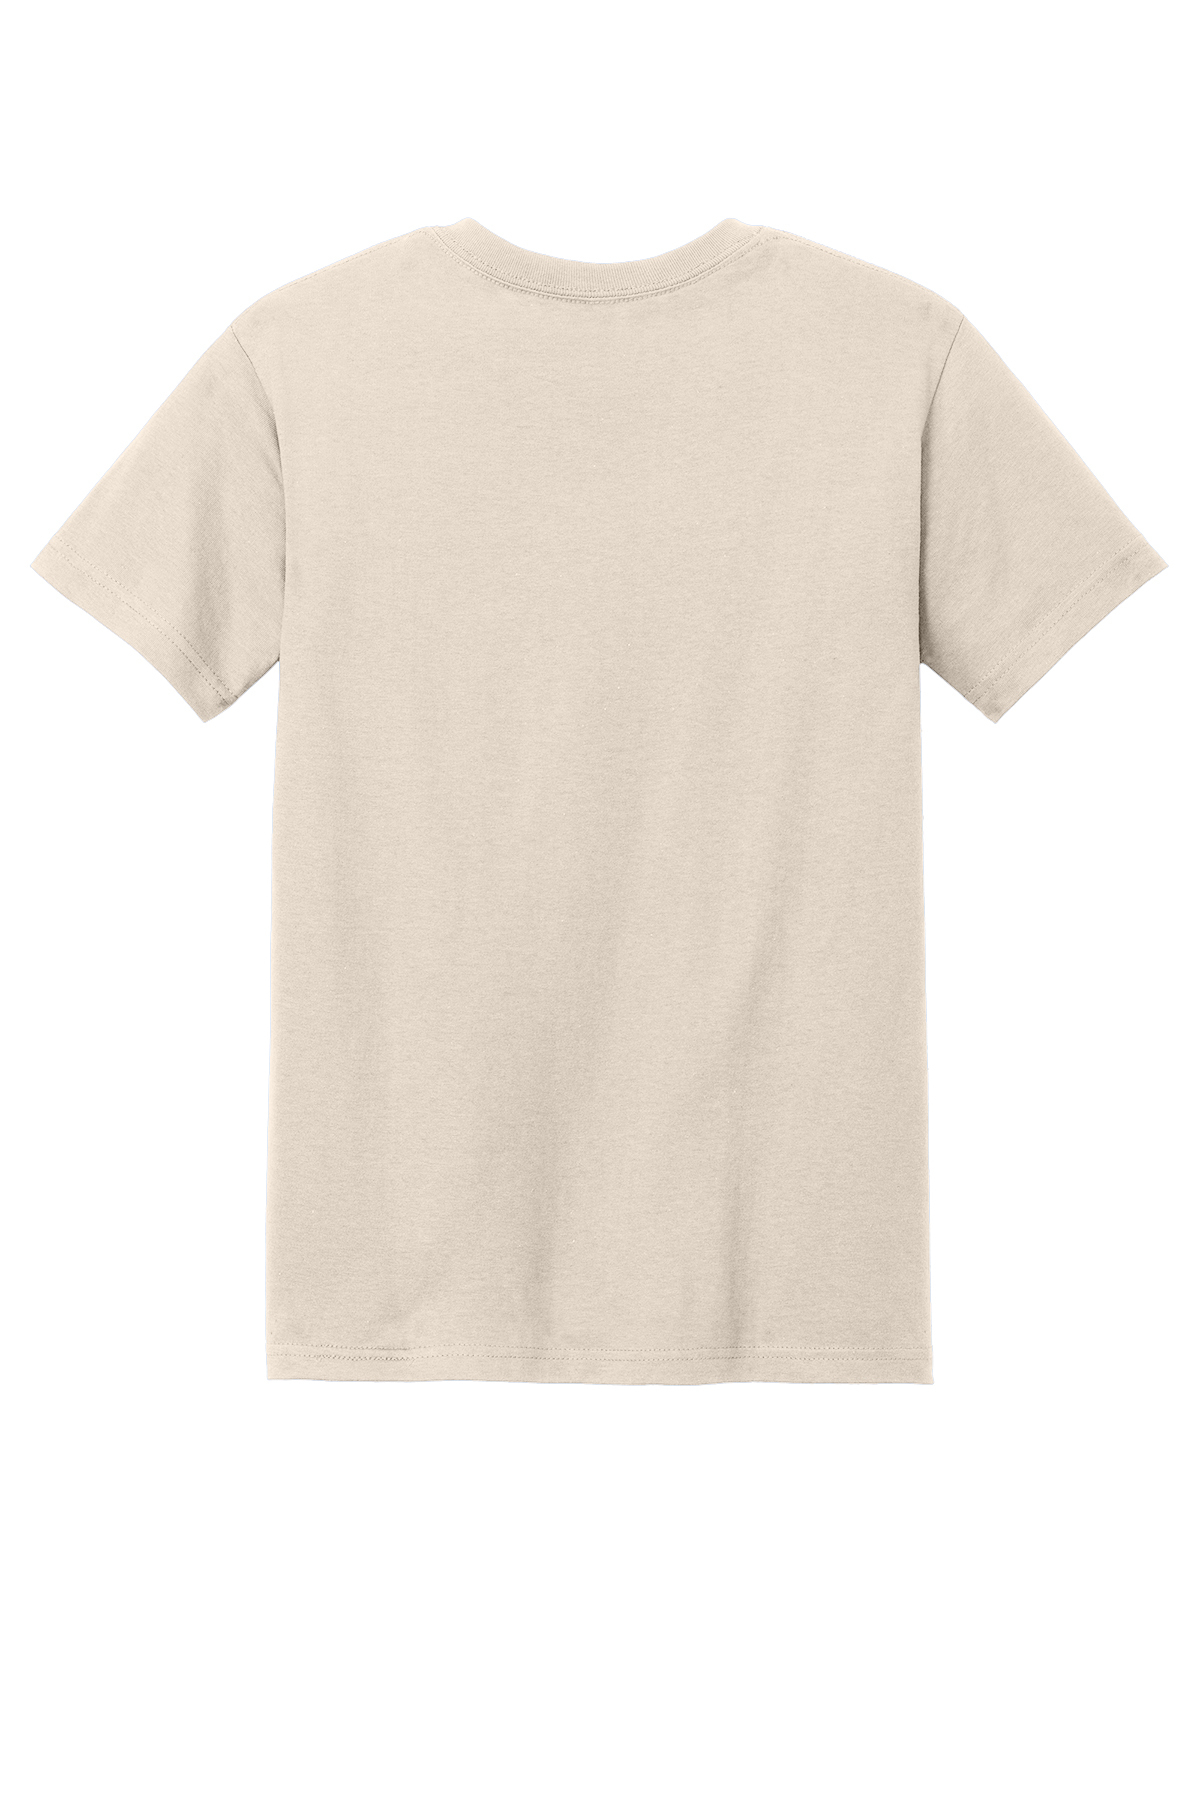 American Apparel Heavyweight Unisex T-Shirt | Product | SanMar